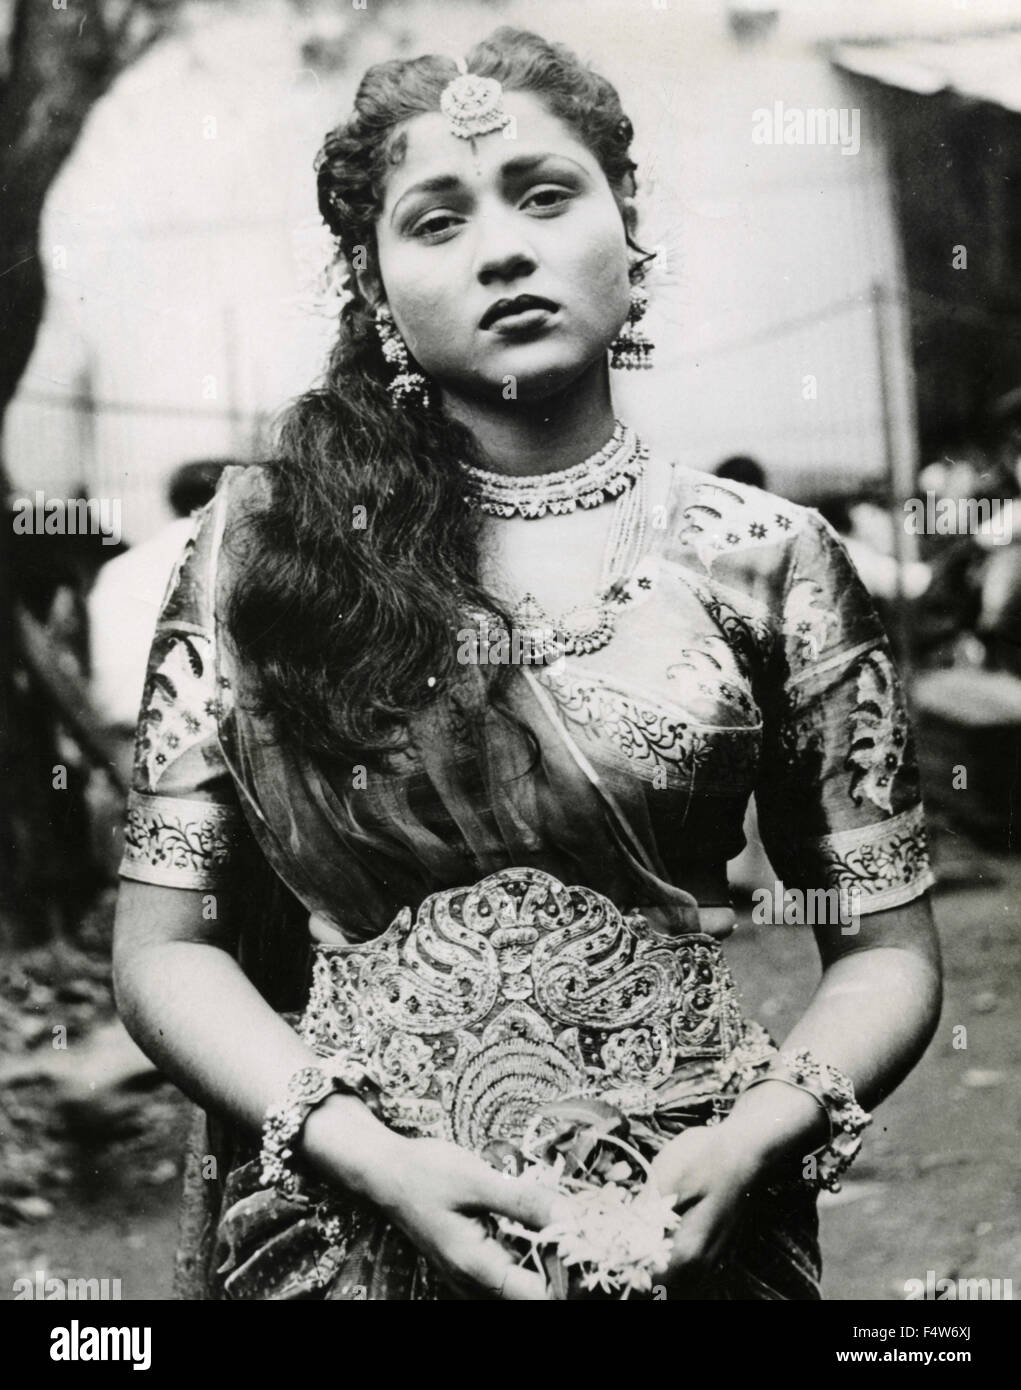 The Indian actress Nirupa Roy wearing a traditional Indian dress Stock Photo